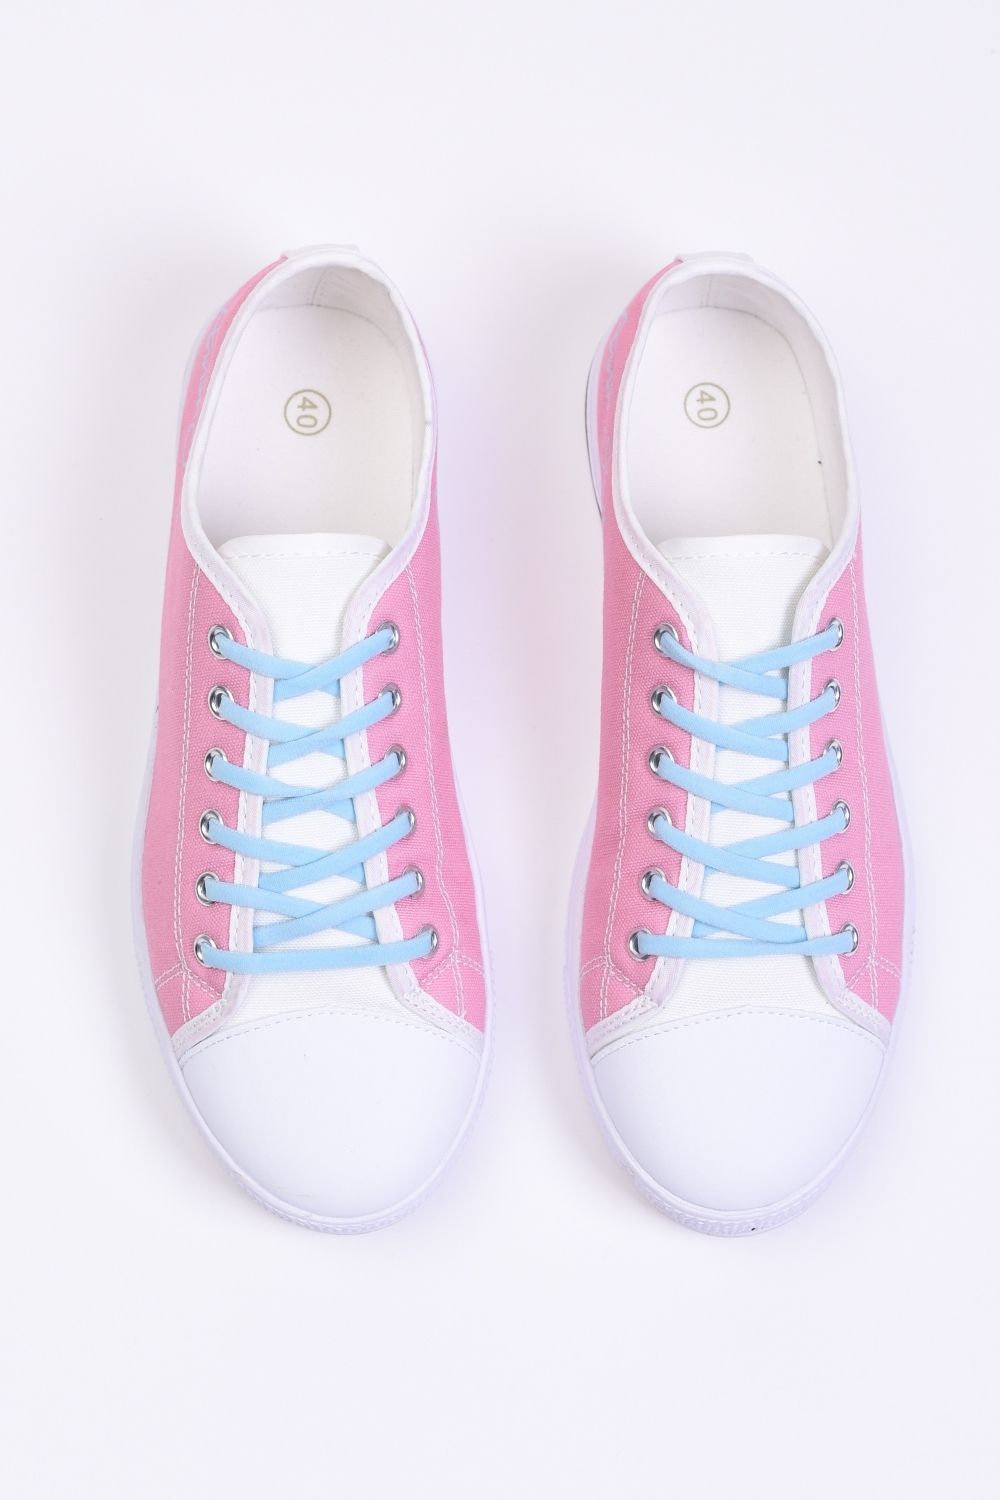 Candy Pink Canvas Shoe - SALE